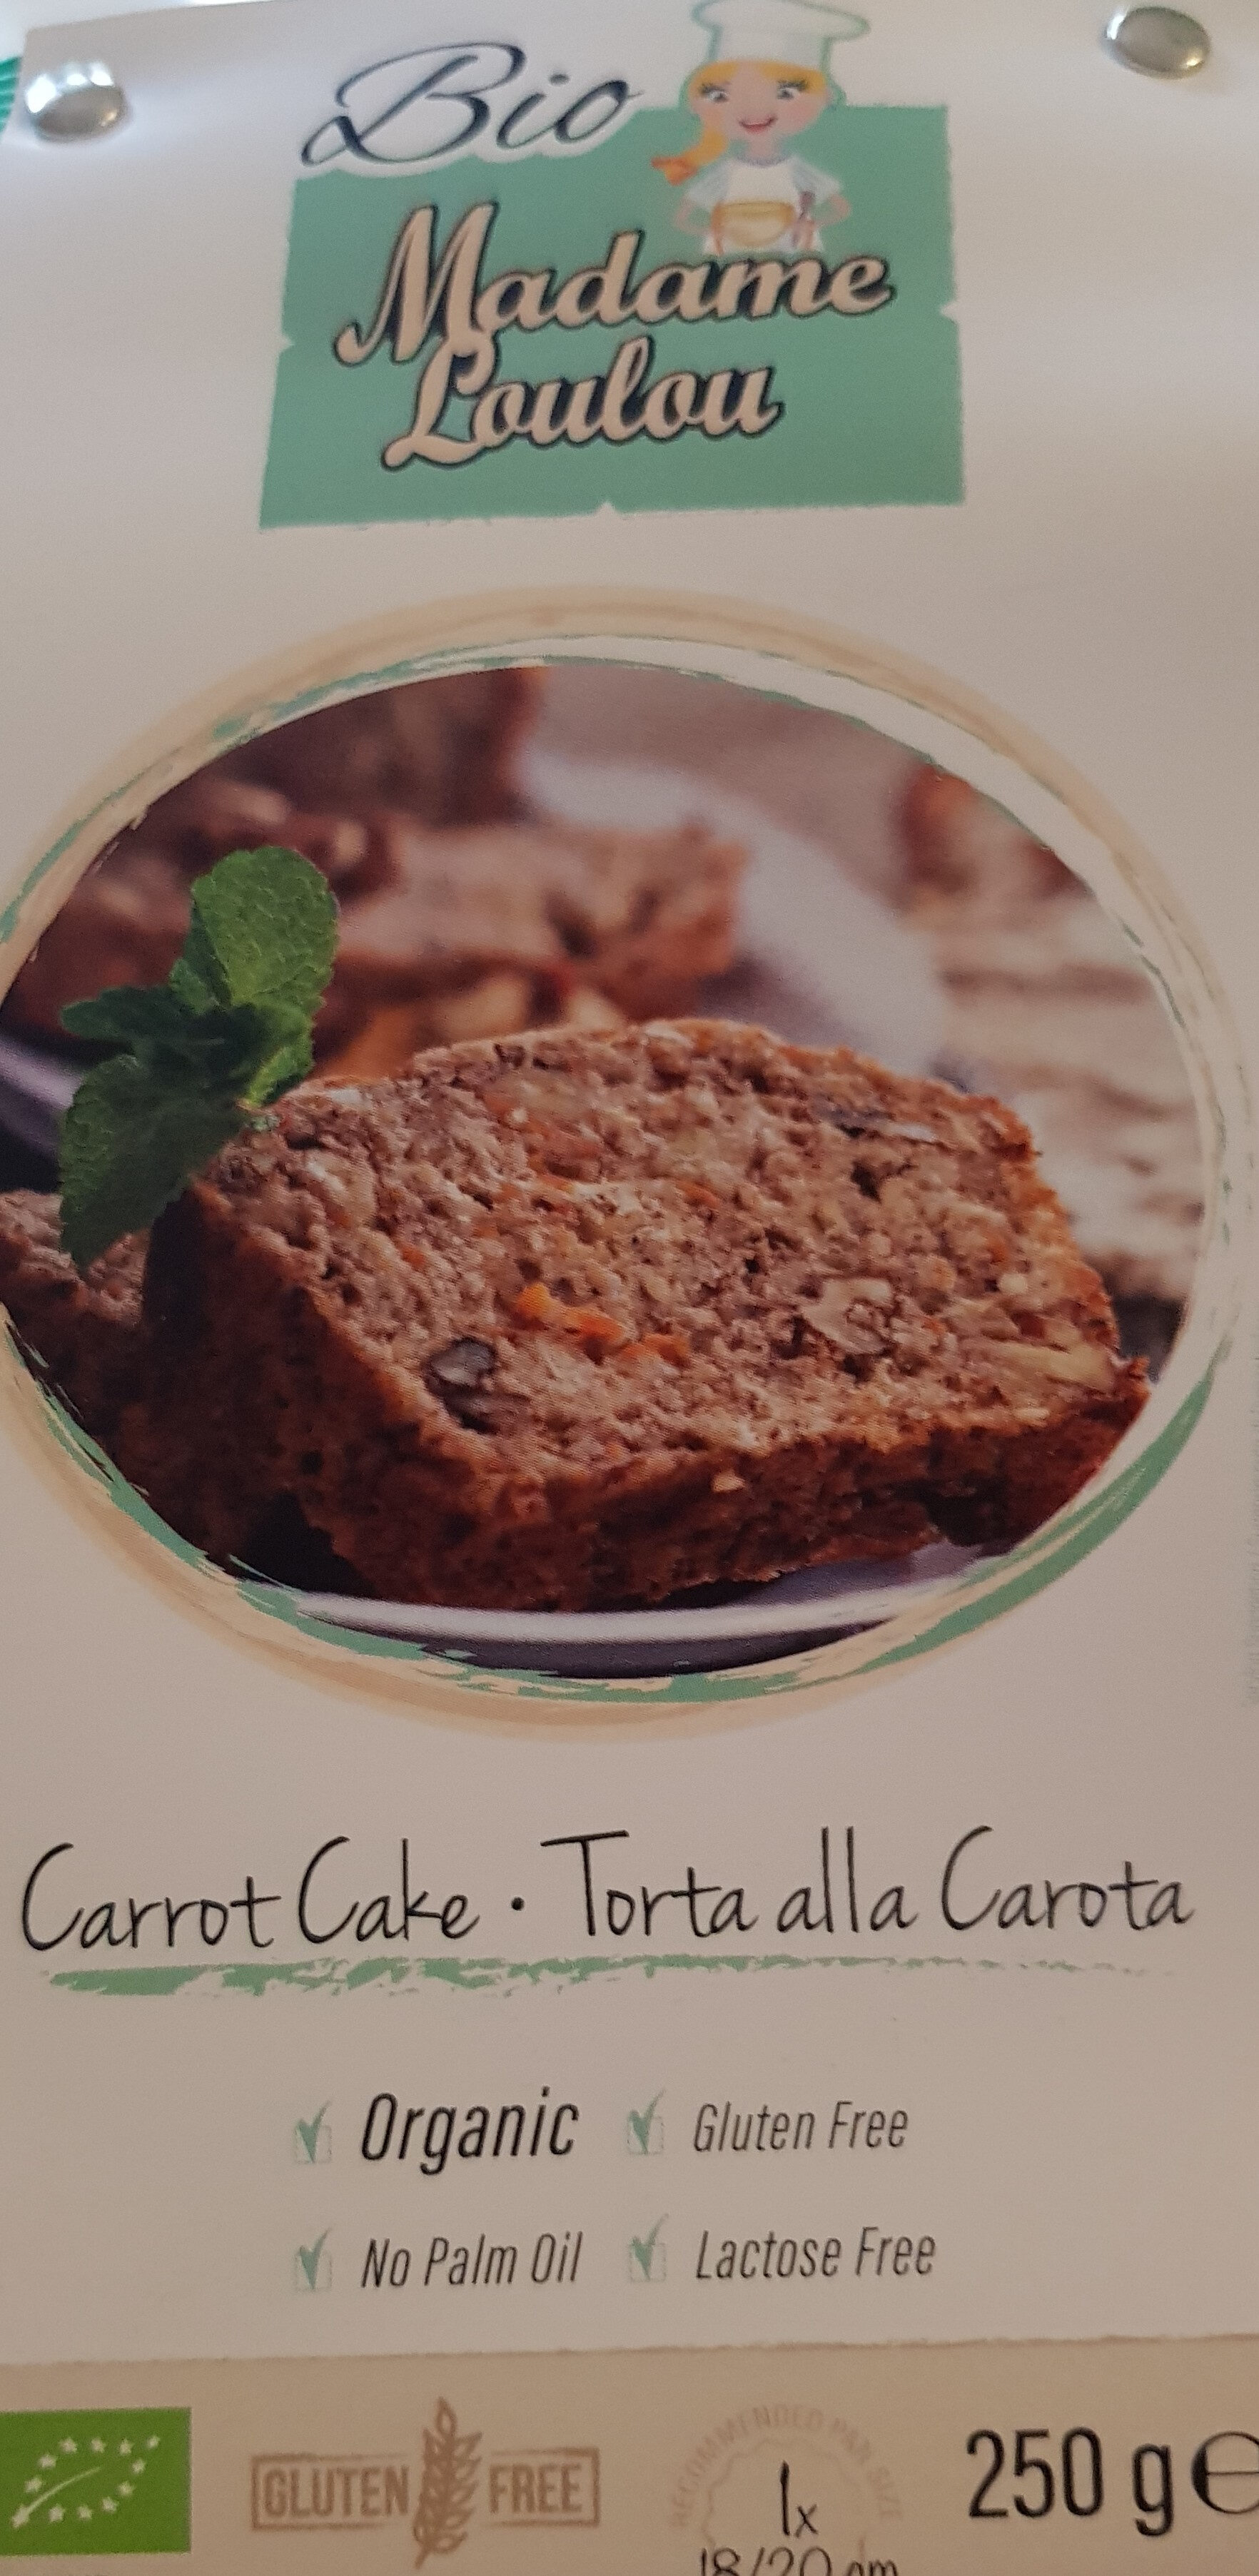 Carrot cake sans gluten - Product - it